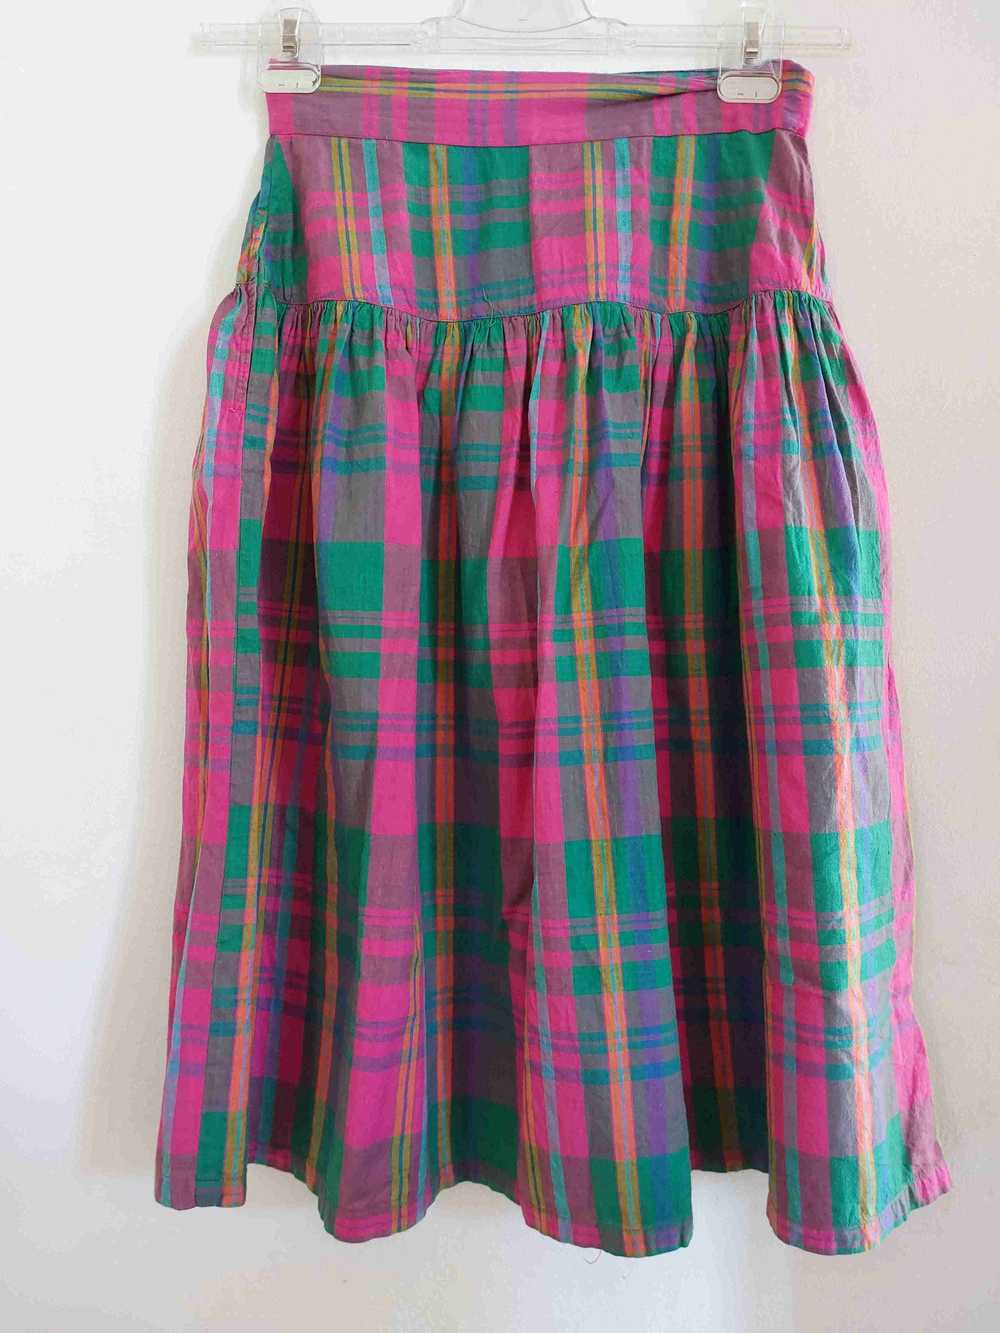 madras skirt - 70's madras skirt with checks in g… - image 4